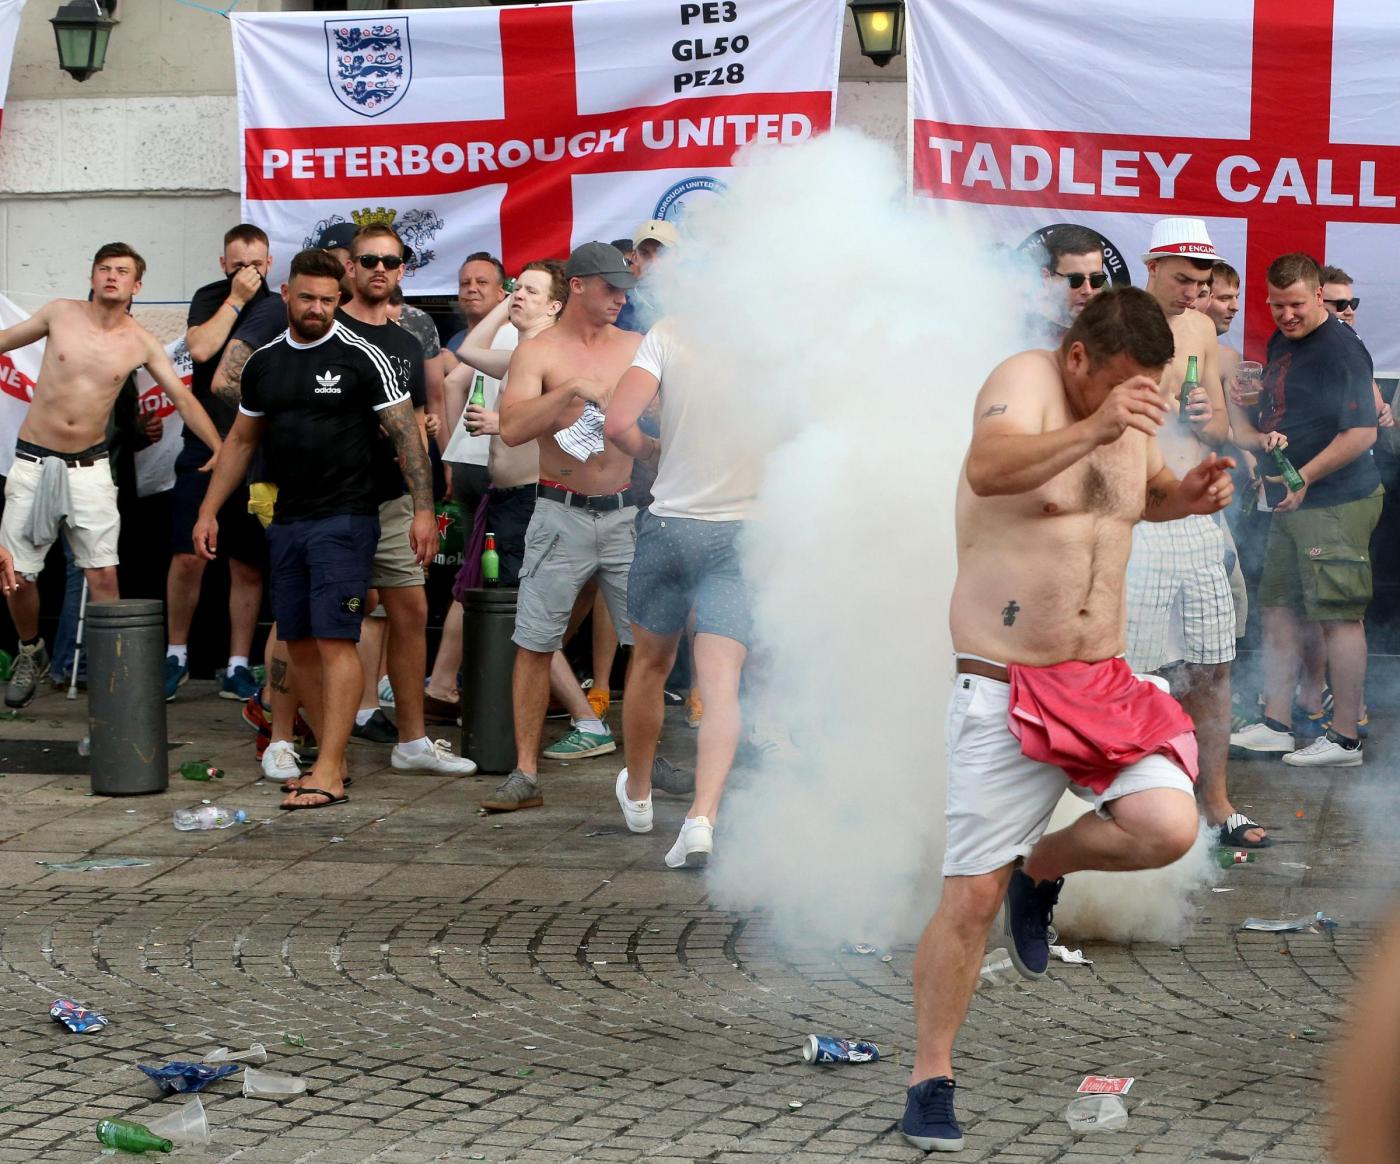 Euro 2016 tensioni tra tifosi inglesi e polizia a Marsiglia